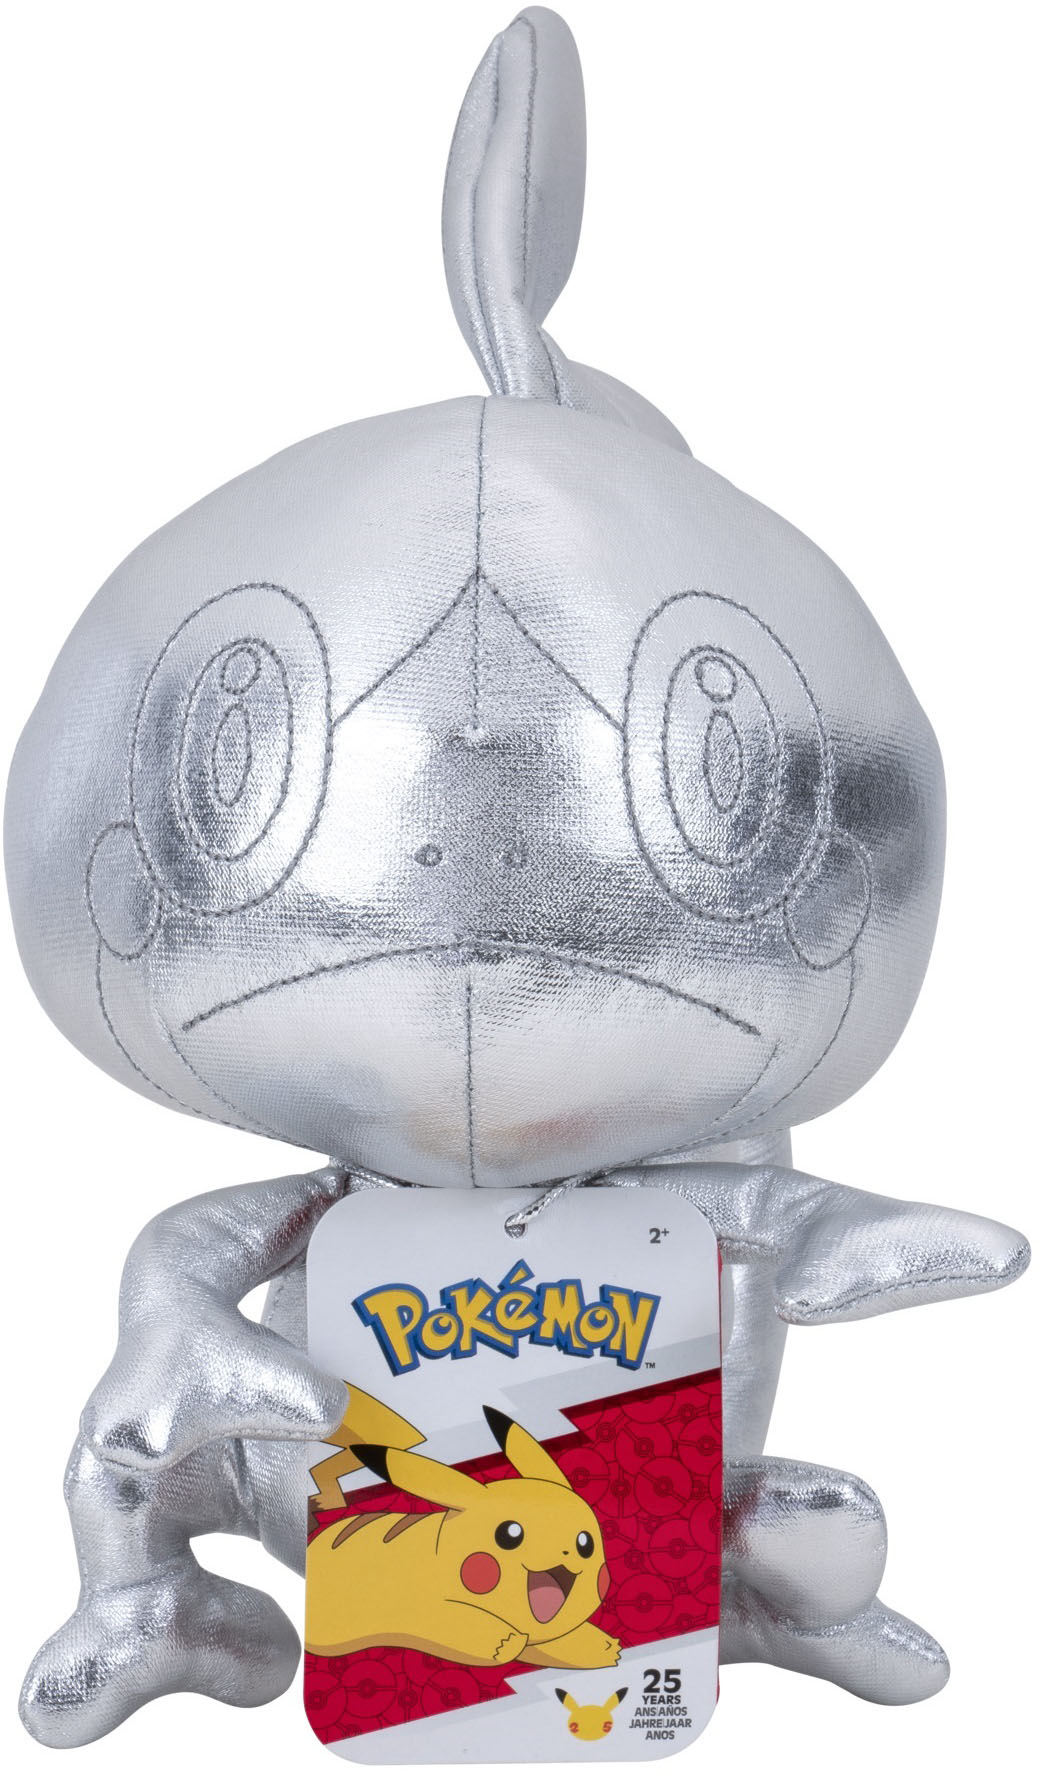  Pokémon 8 Silver Pikachu 25th Anniversary Plush